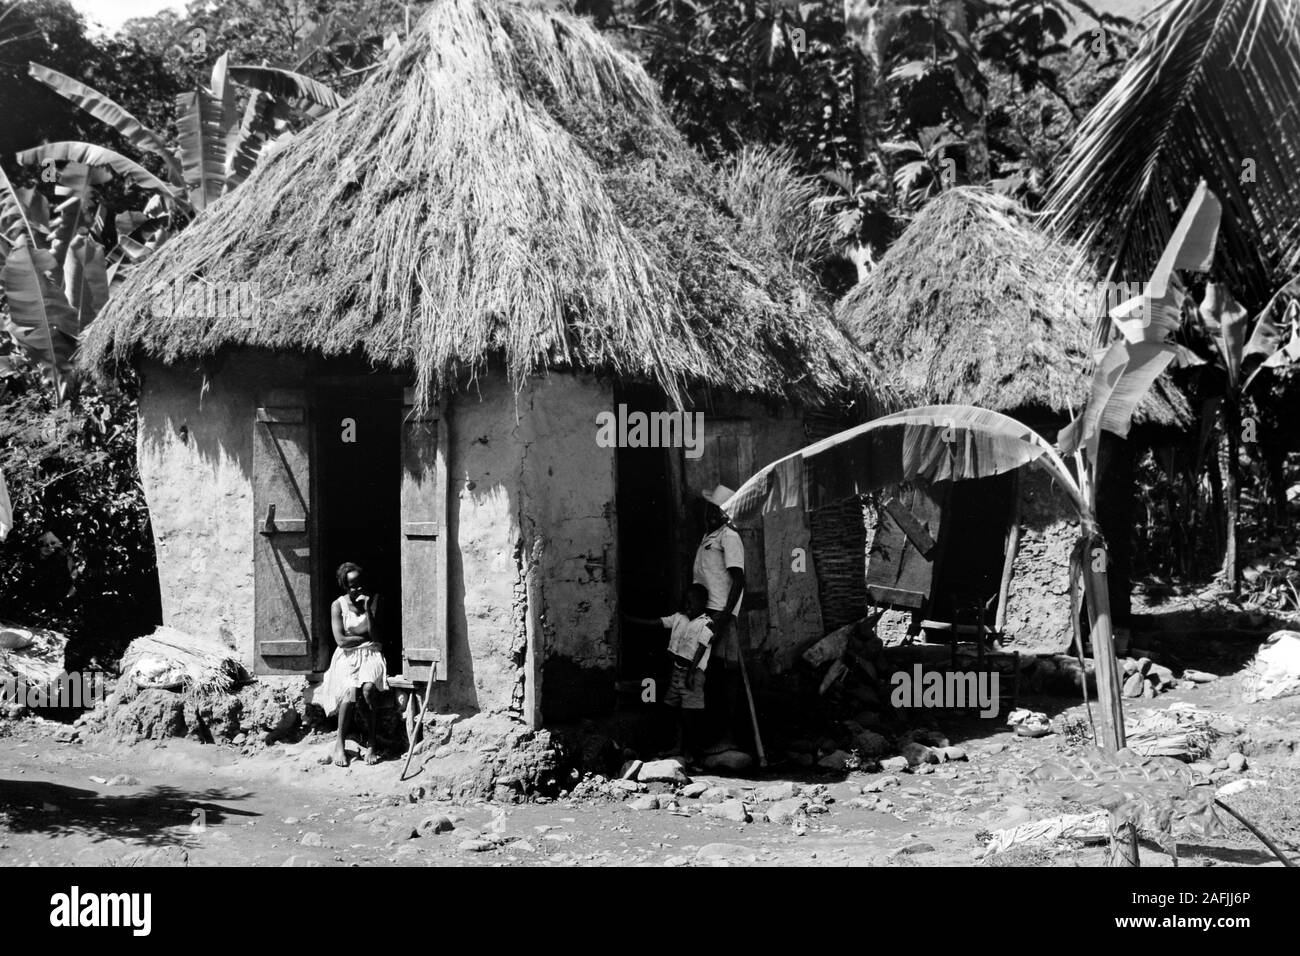 Typische Behausung in Cap-Haitien, 1967. Typical dwelling in Cap-Haitien, 1967. Stock Photo